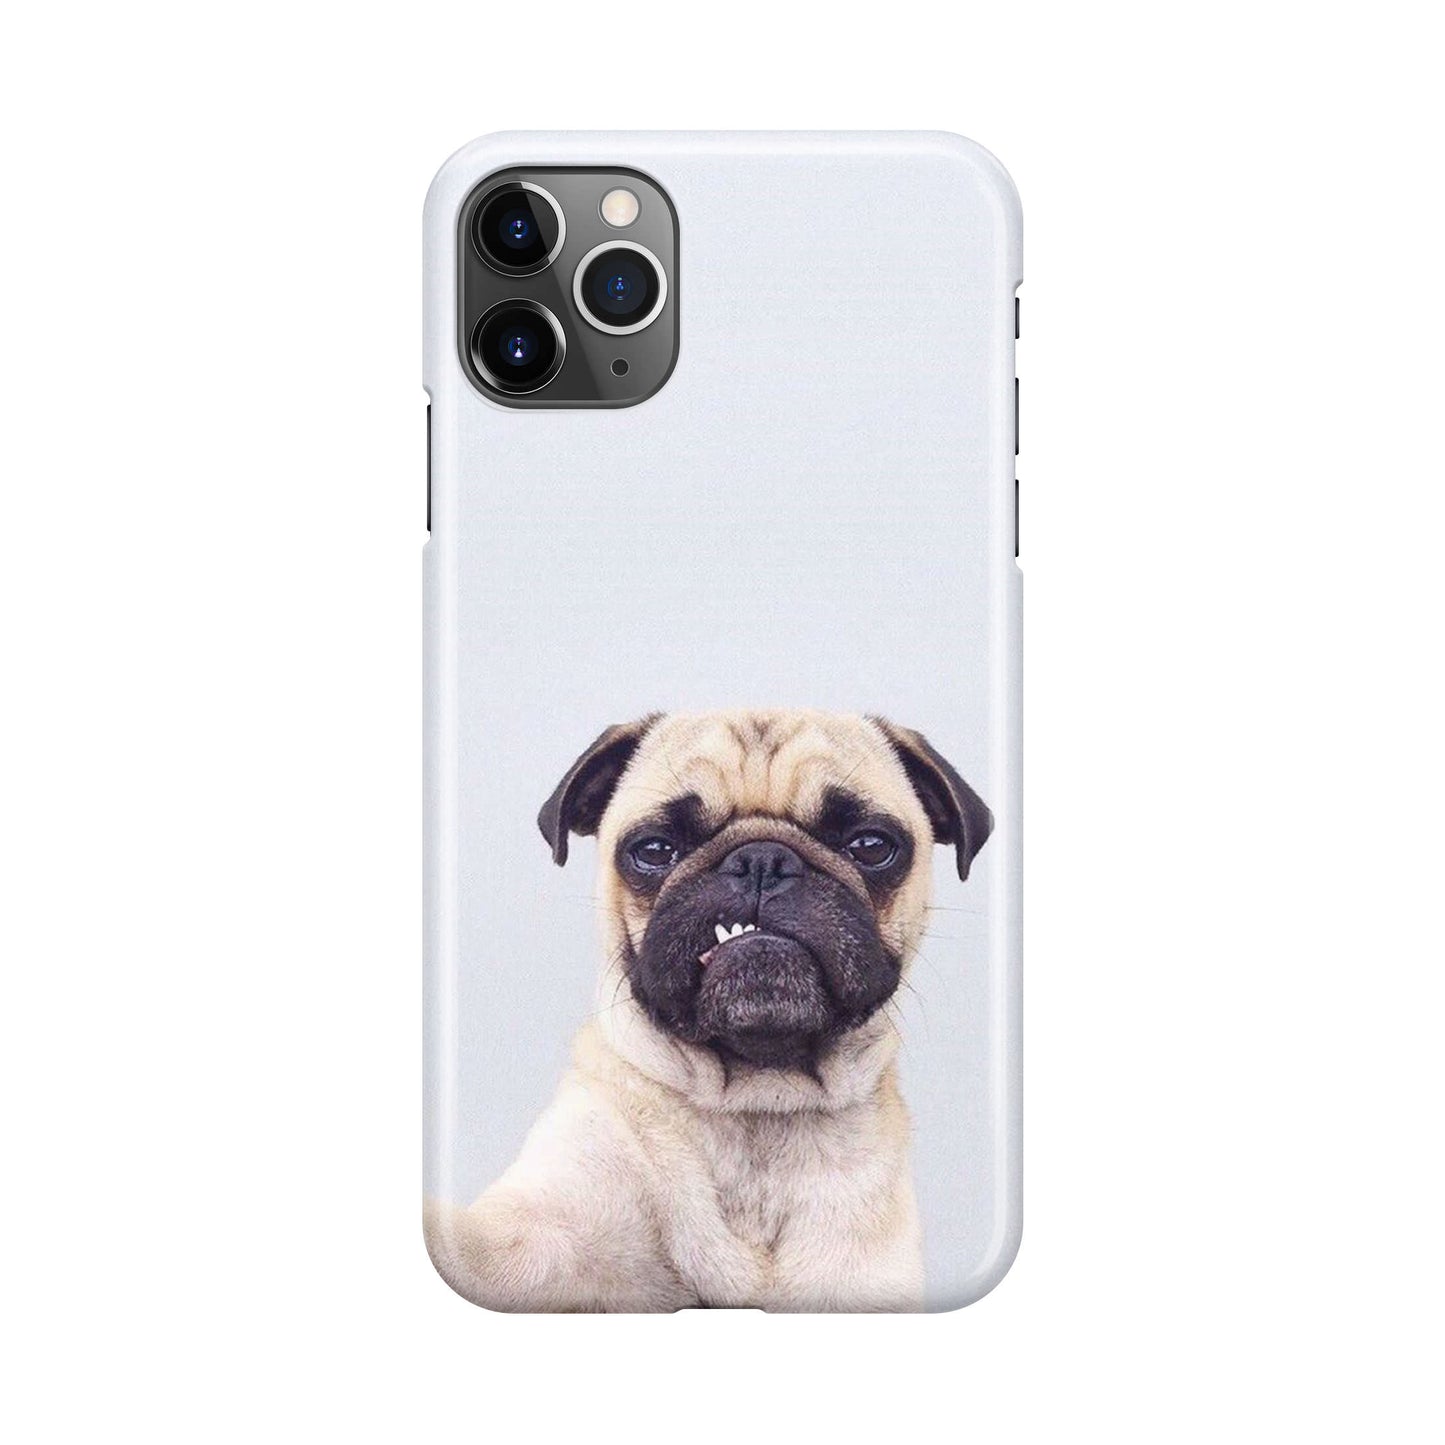 The Selfie Pug iPhone 11 Pro Max Case